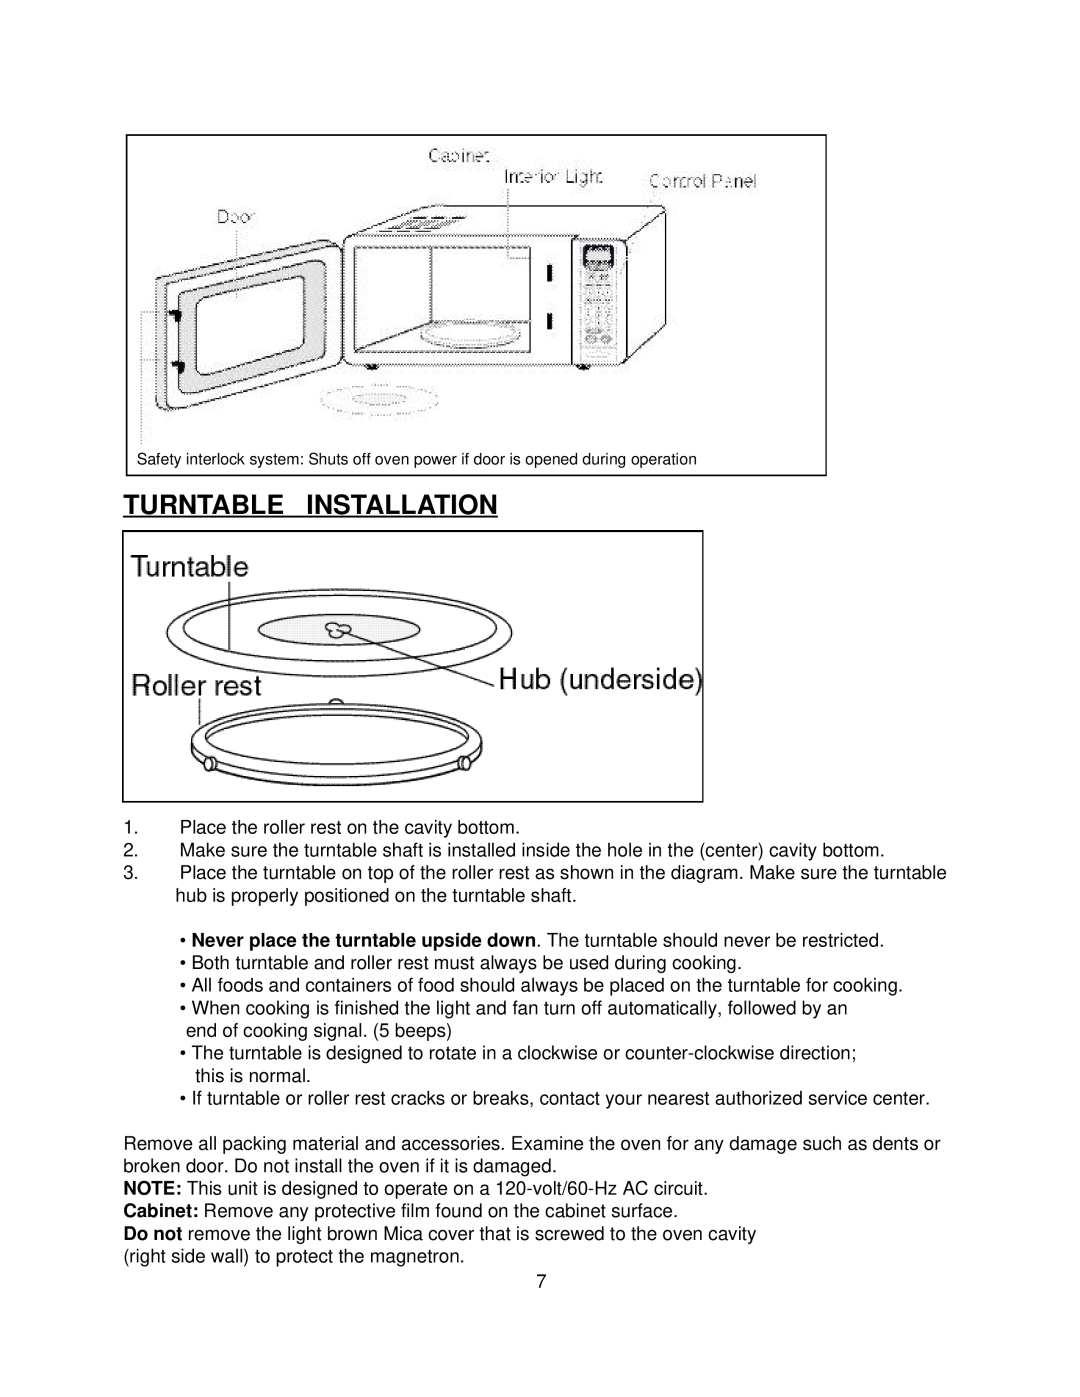 Danby DMW1400W manual Turntable Installation 